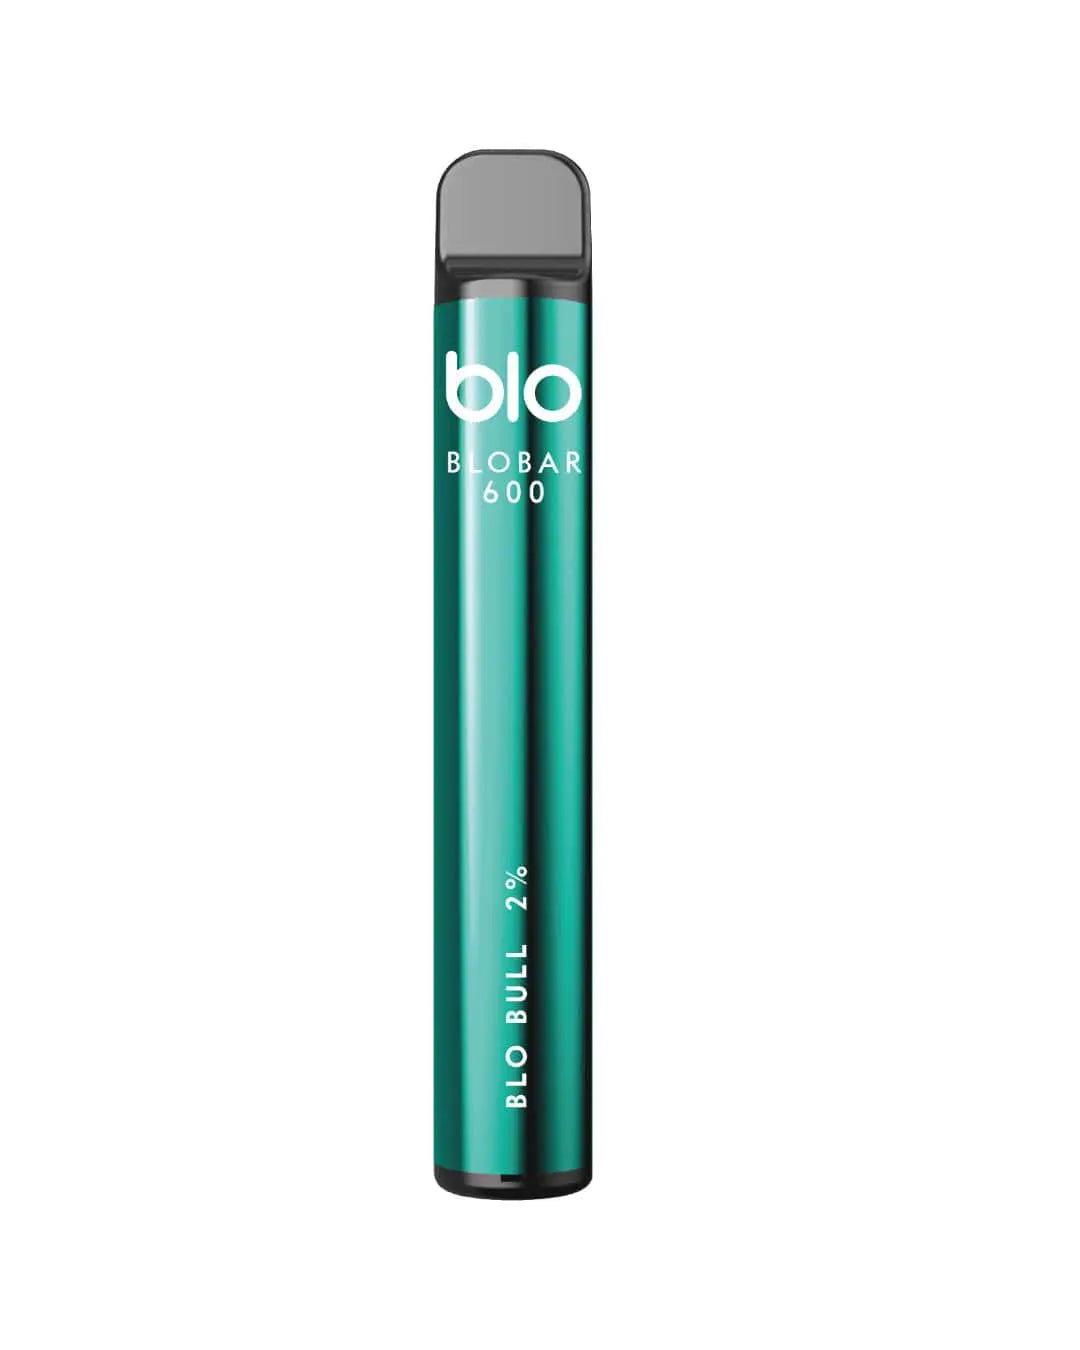 Blo Bar 600 - Blo Bull Disposable Vapes